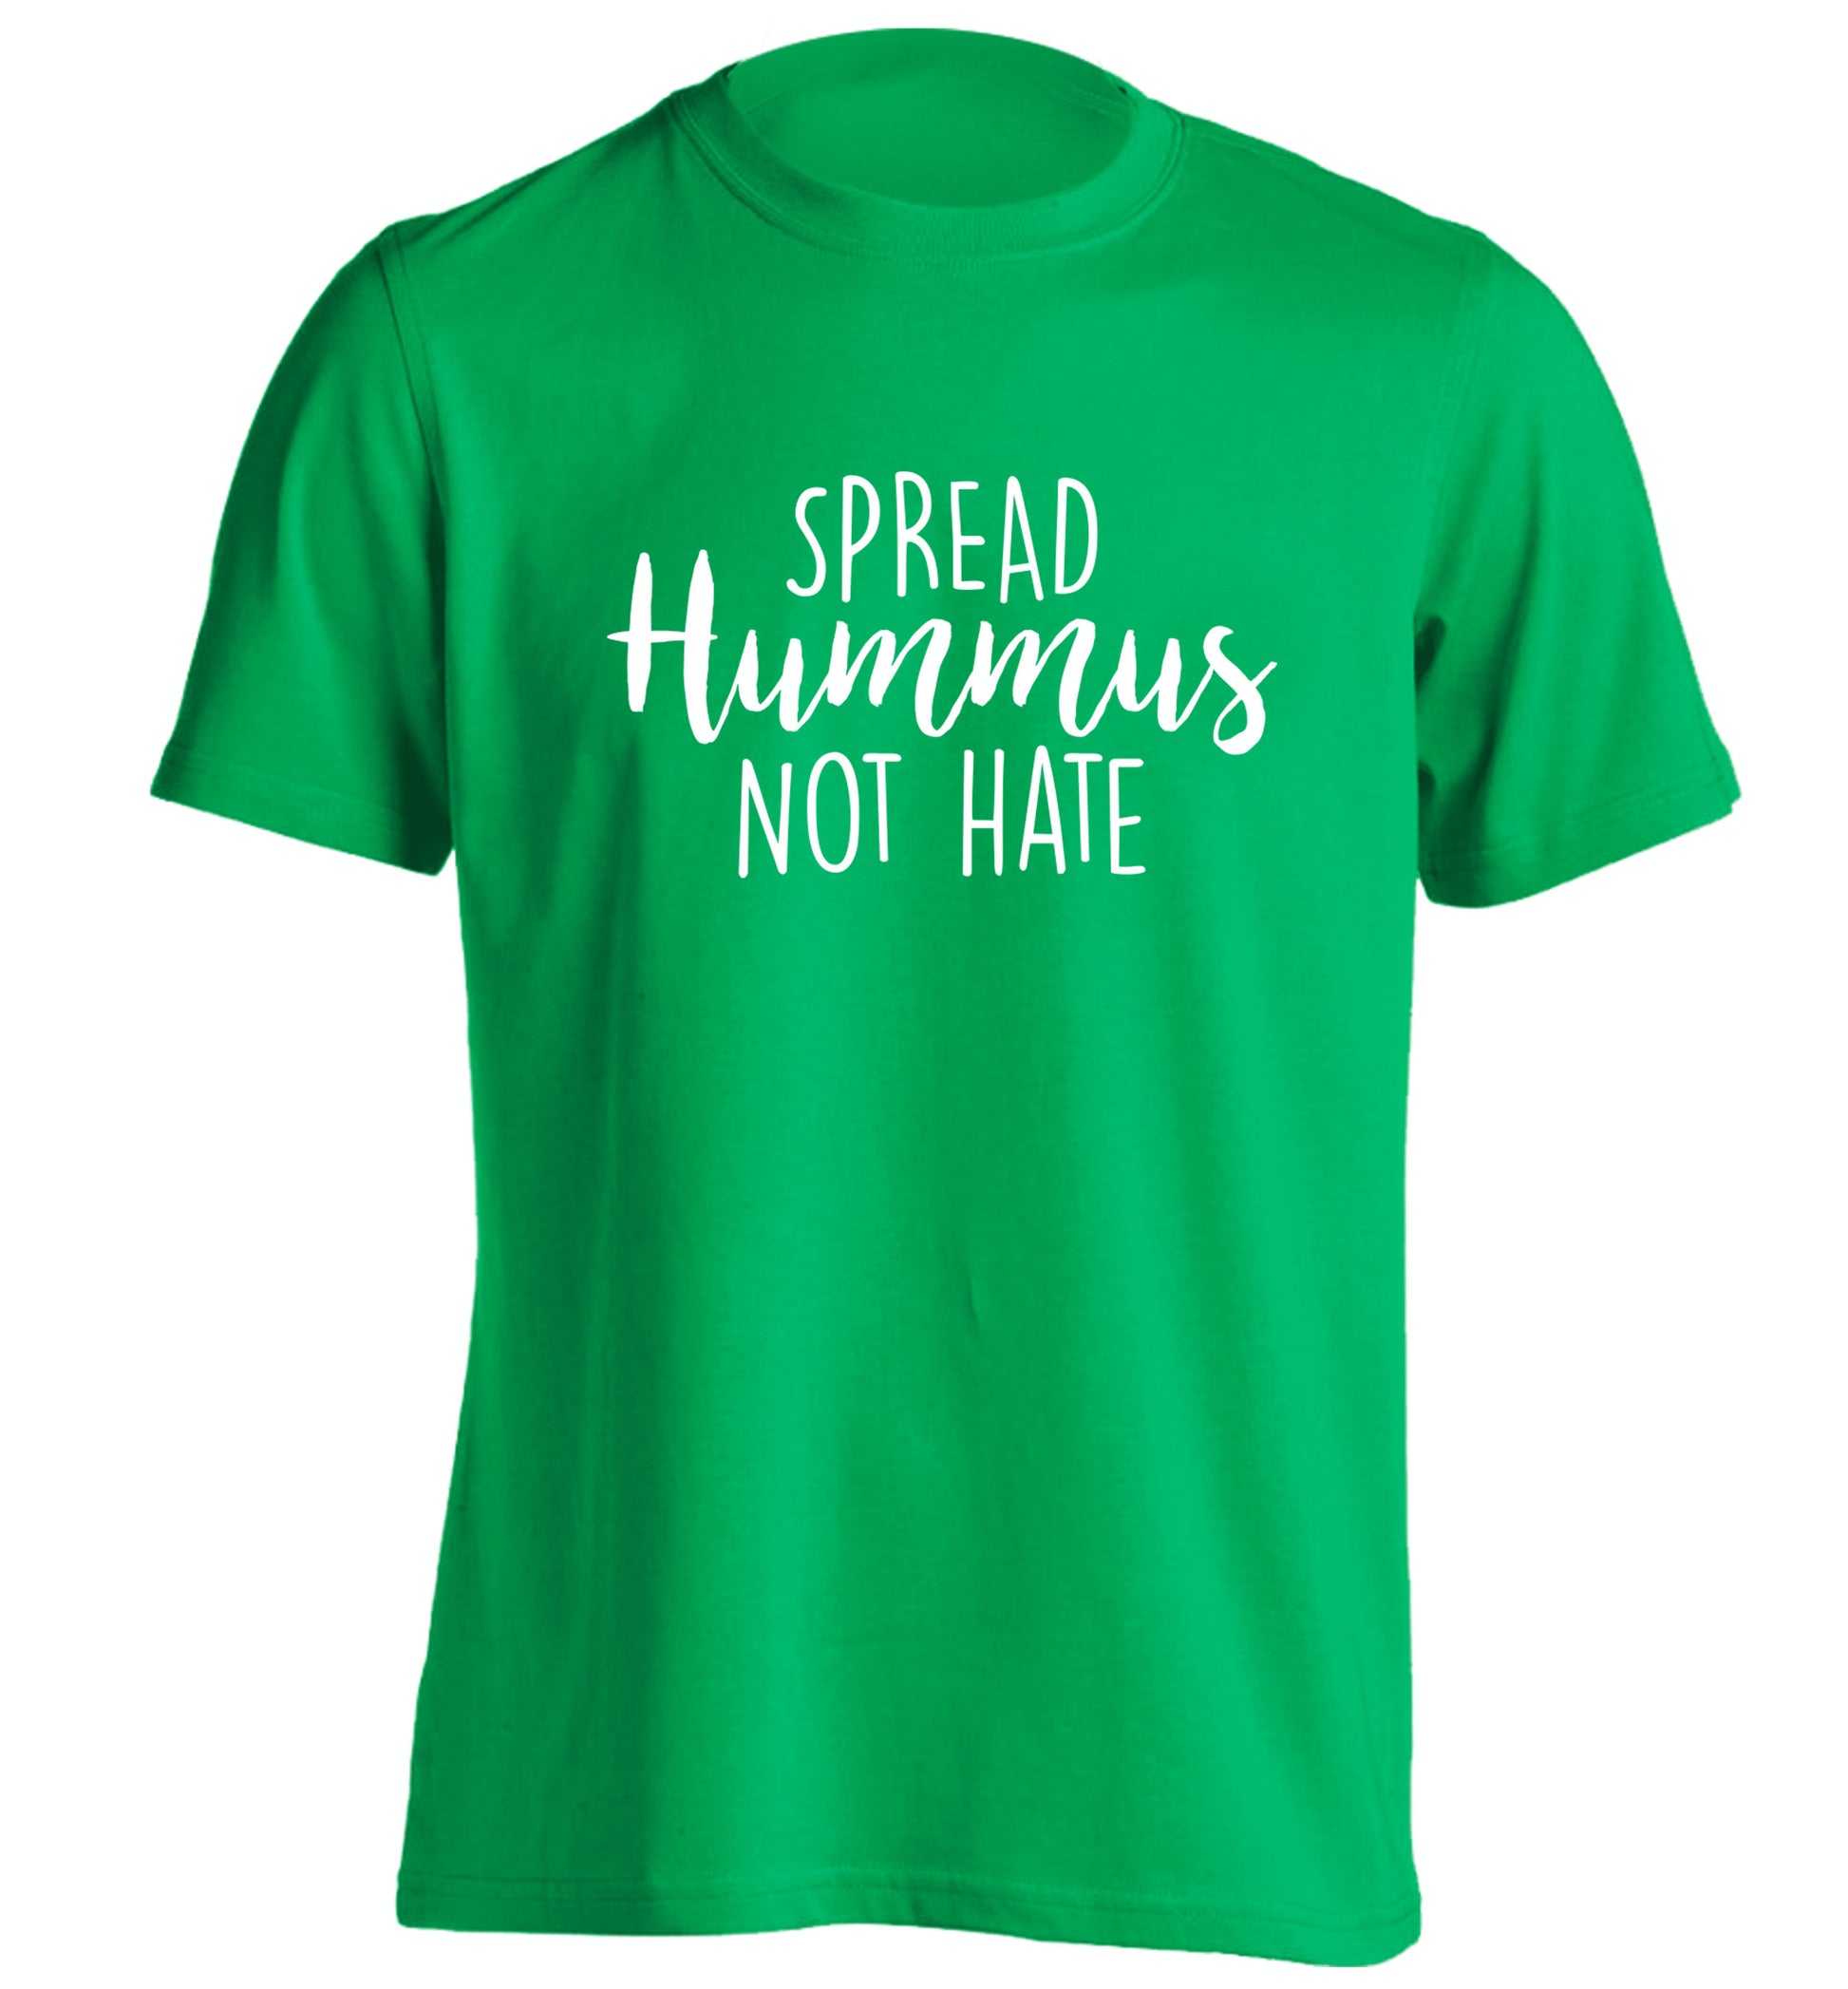 Spread hummus not hate script text adults unisex green Tshirt 2XL